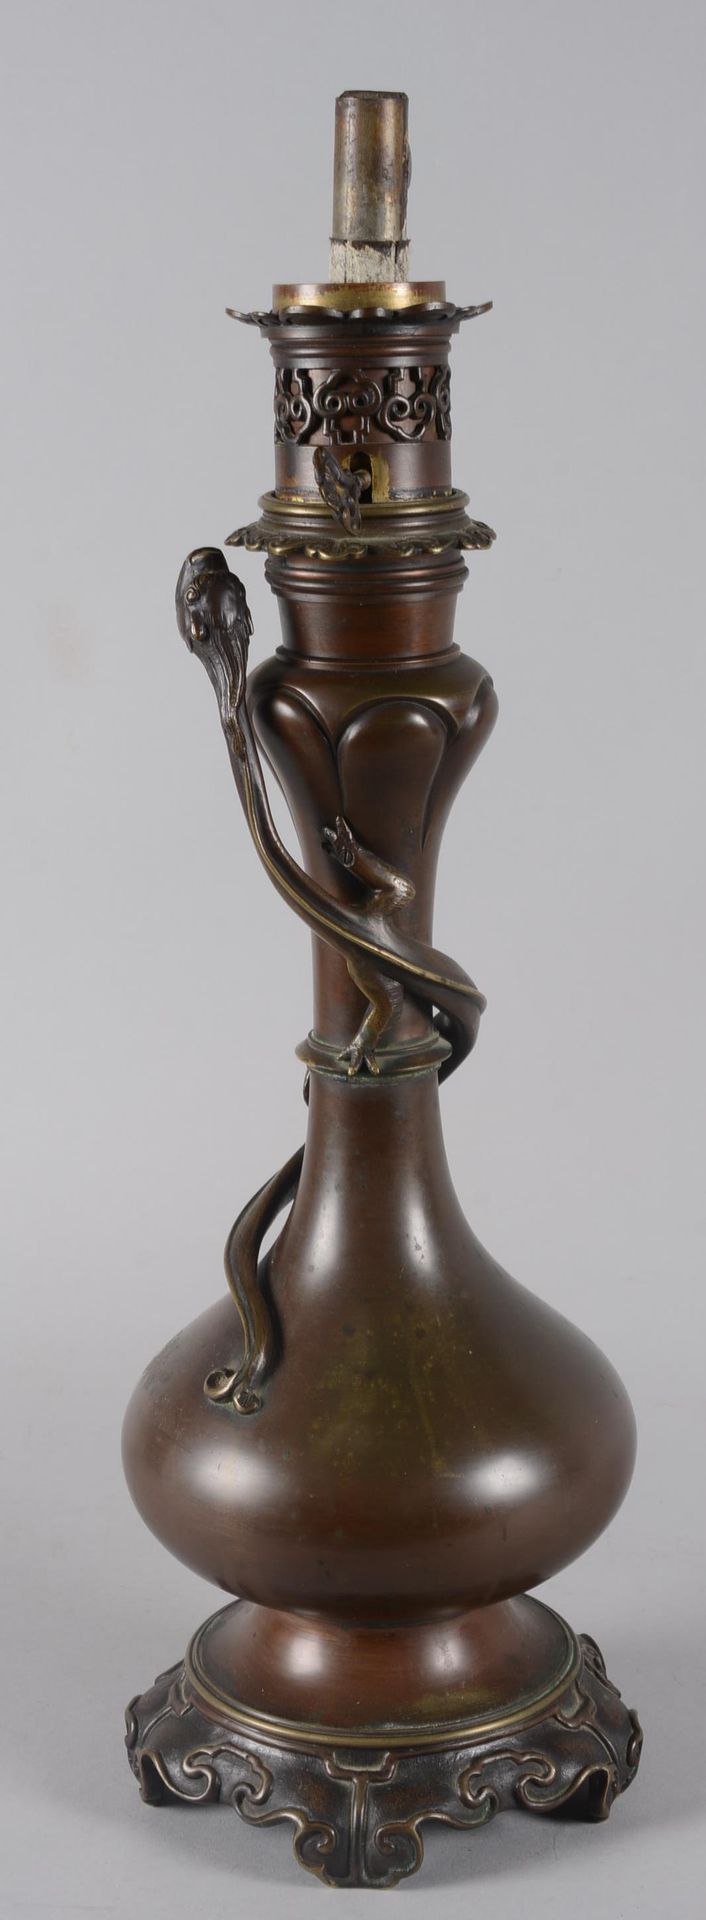 Lampe en bronze à décor d'un lézard GIAPPONE.

Lampada in bronzo decorata con un&hellip;